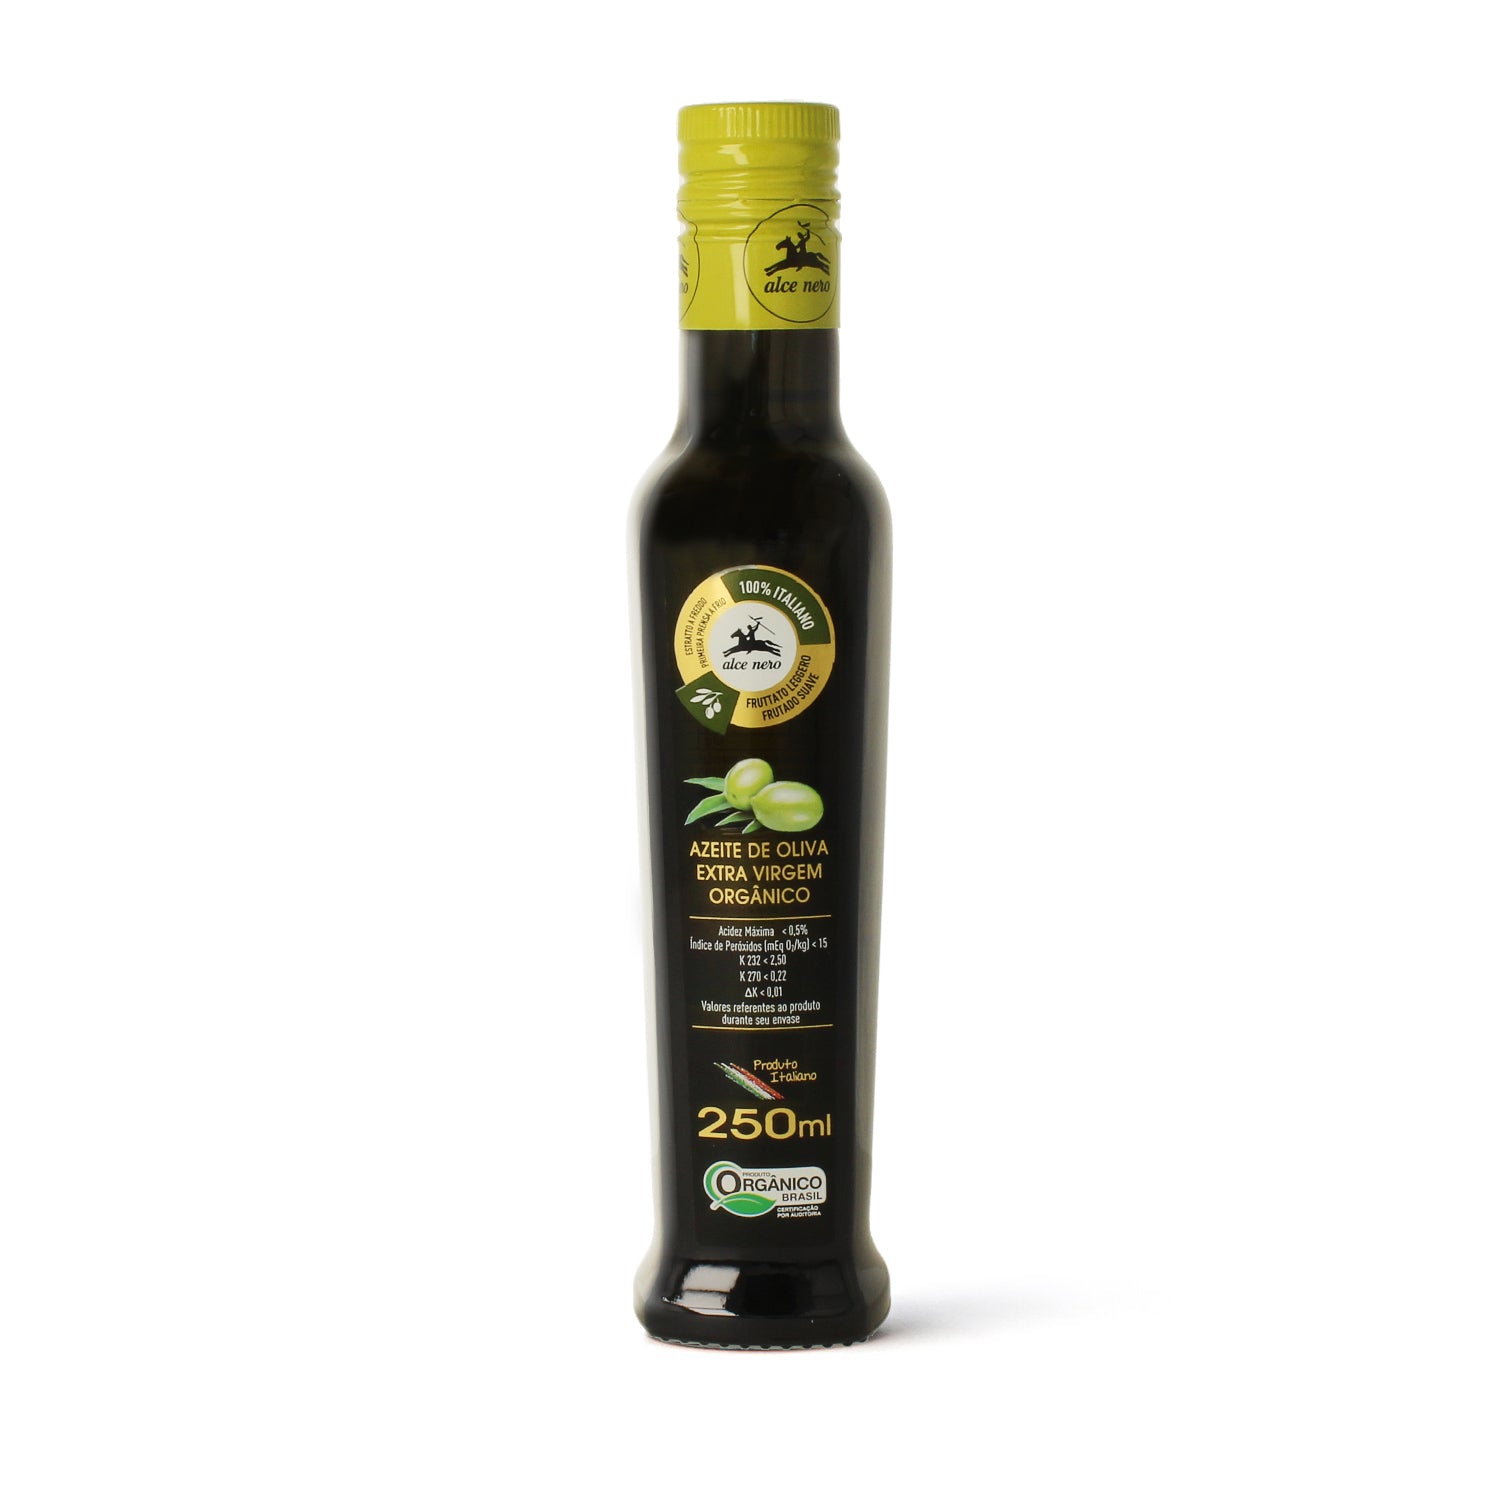 Azeite de oliva extra virgem orgânico - OL250BR